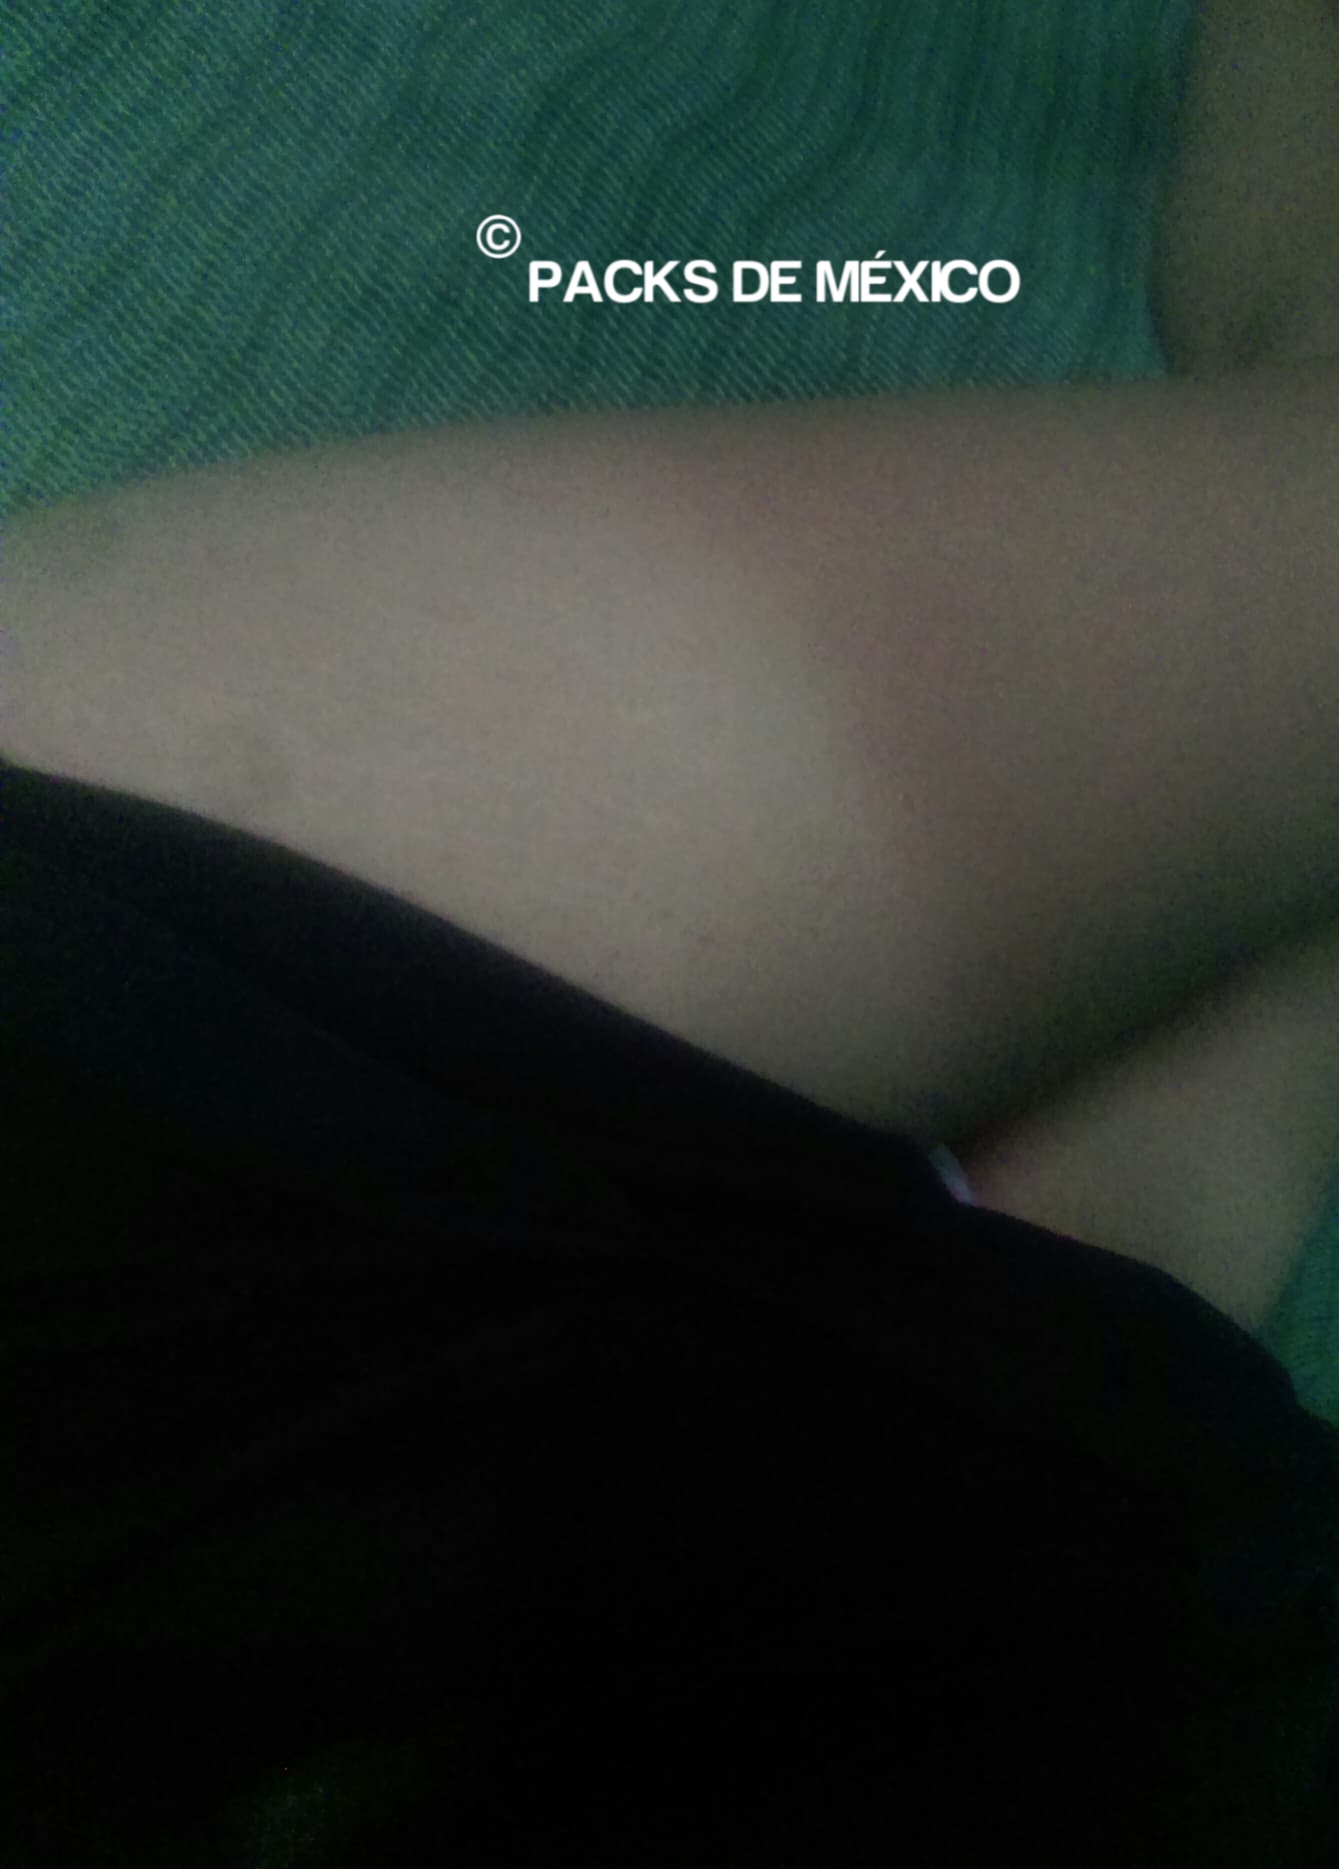 Packs de Merida, Packs de Campeche, Packs de Cancun.